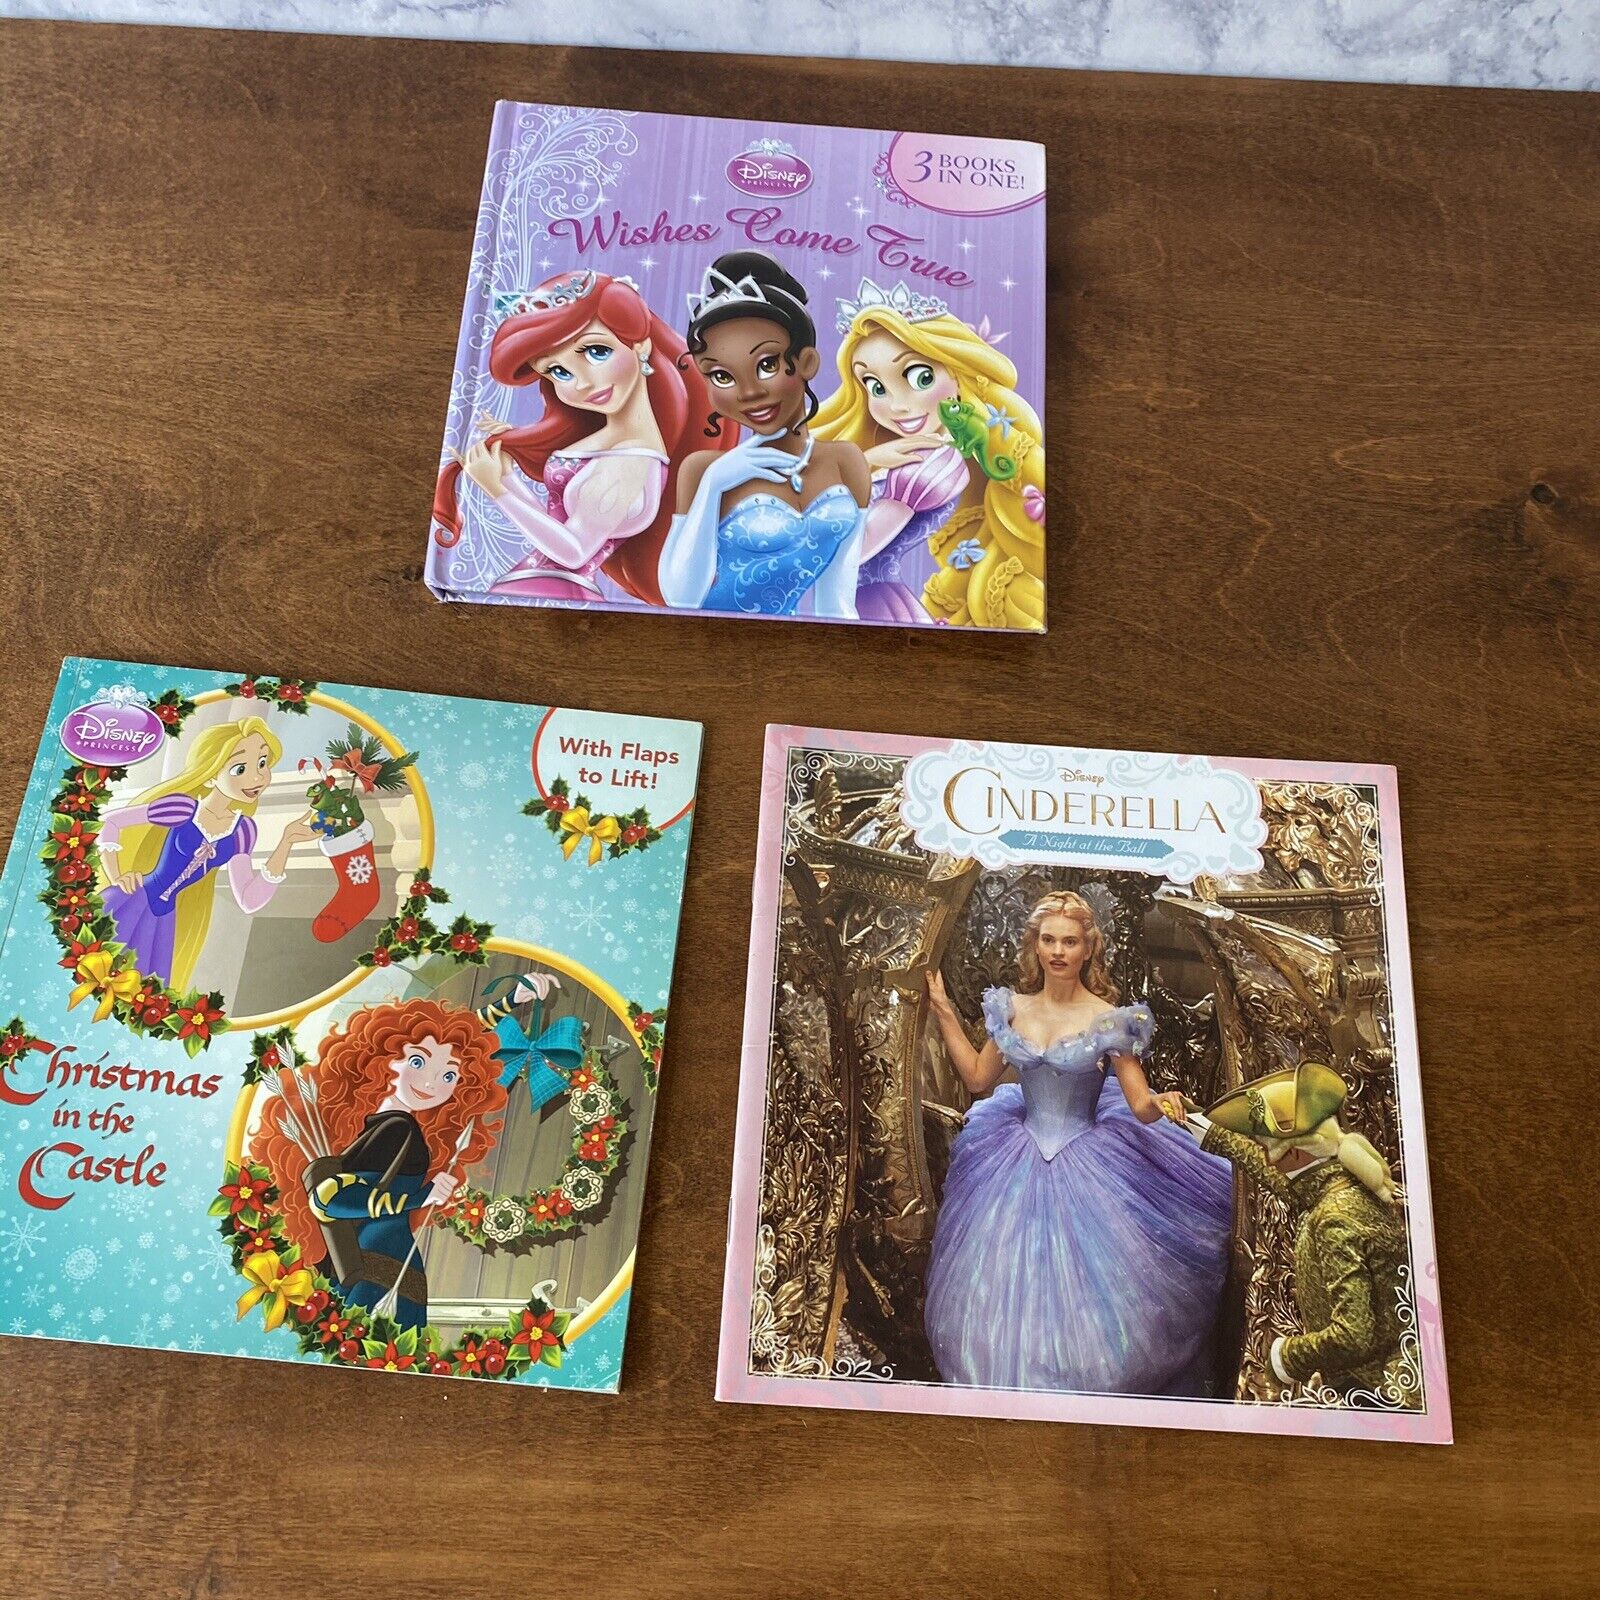 Disney Princess Books, Christmas in the Castle, Cinderella, Wishes Come True.